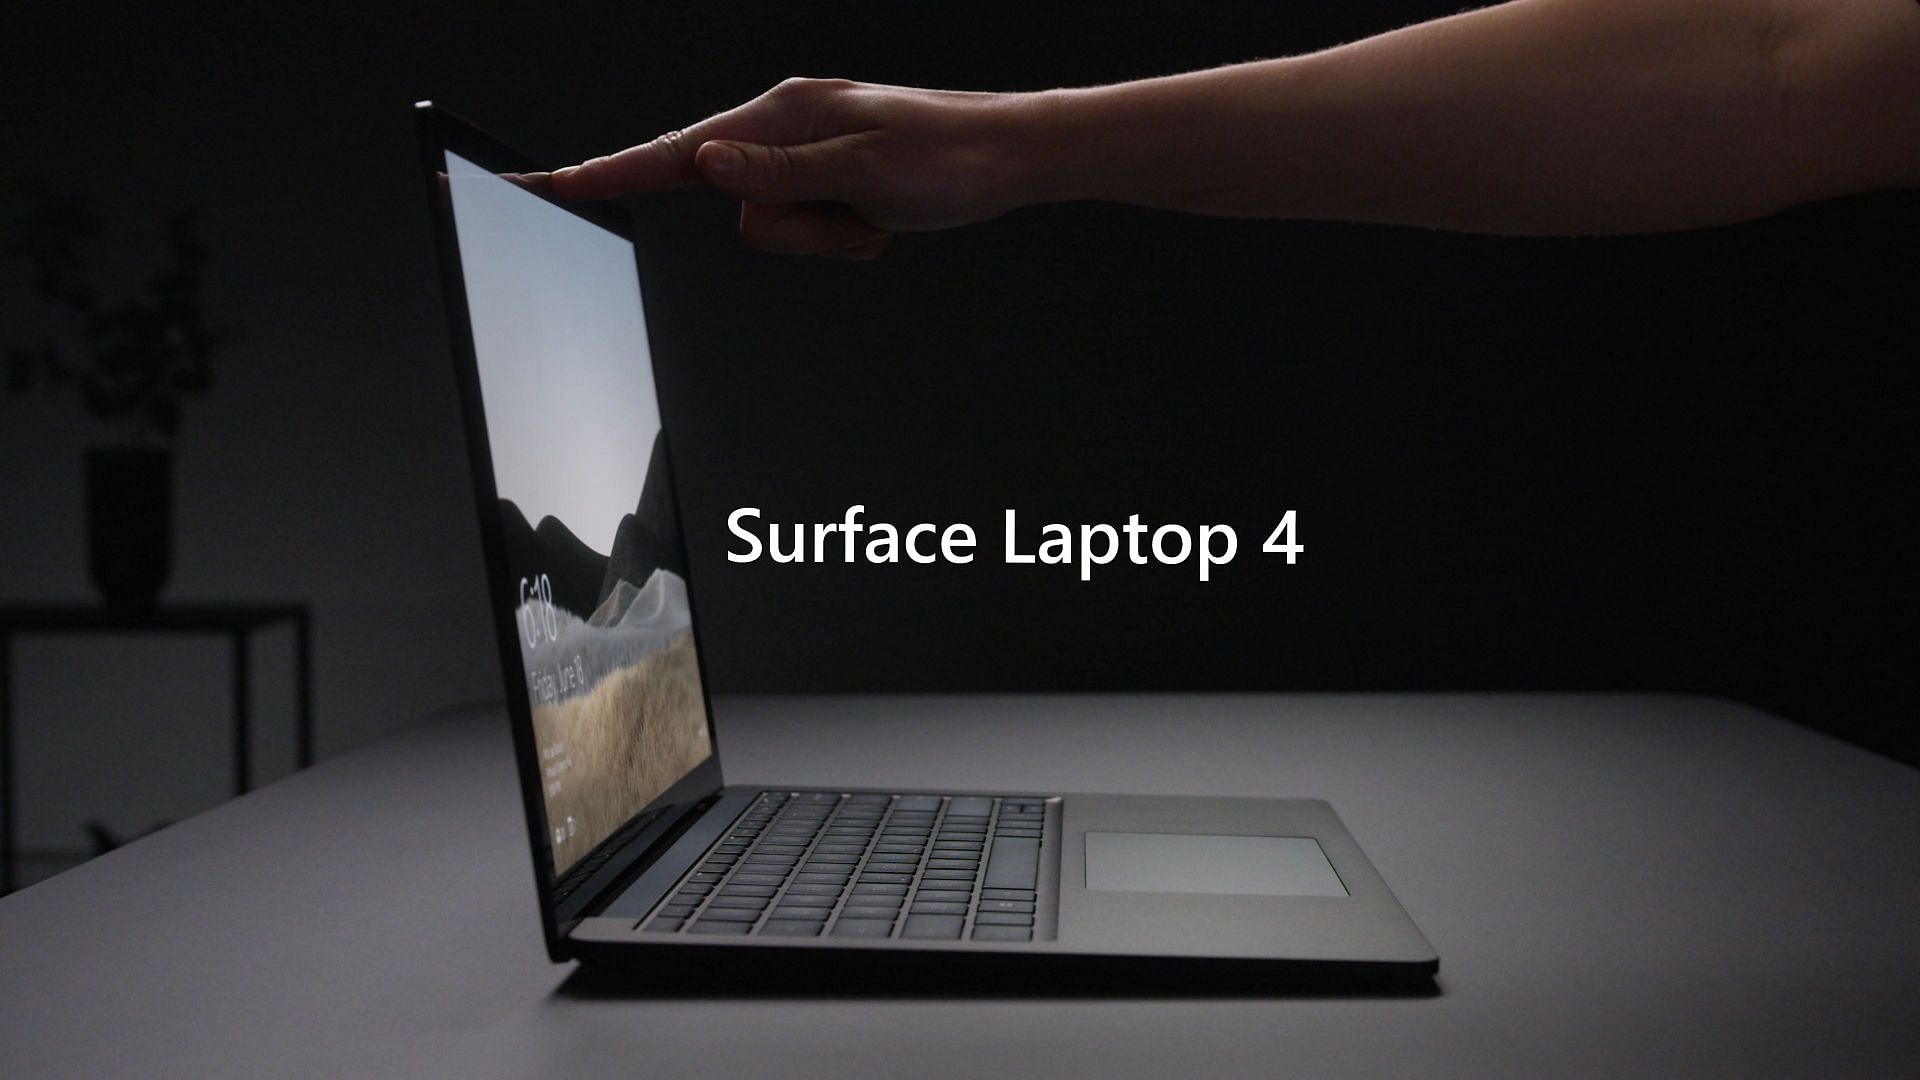 The Microsoft Surface Laptop 4 (Image via Microsoft)